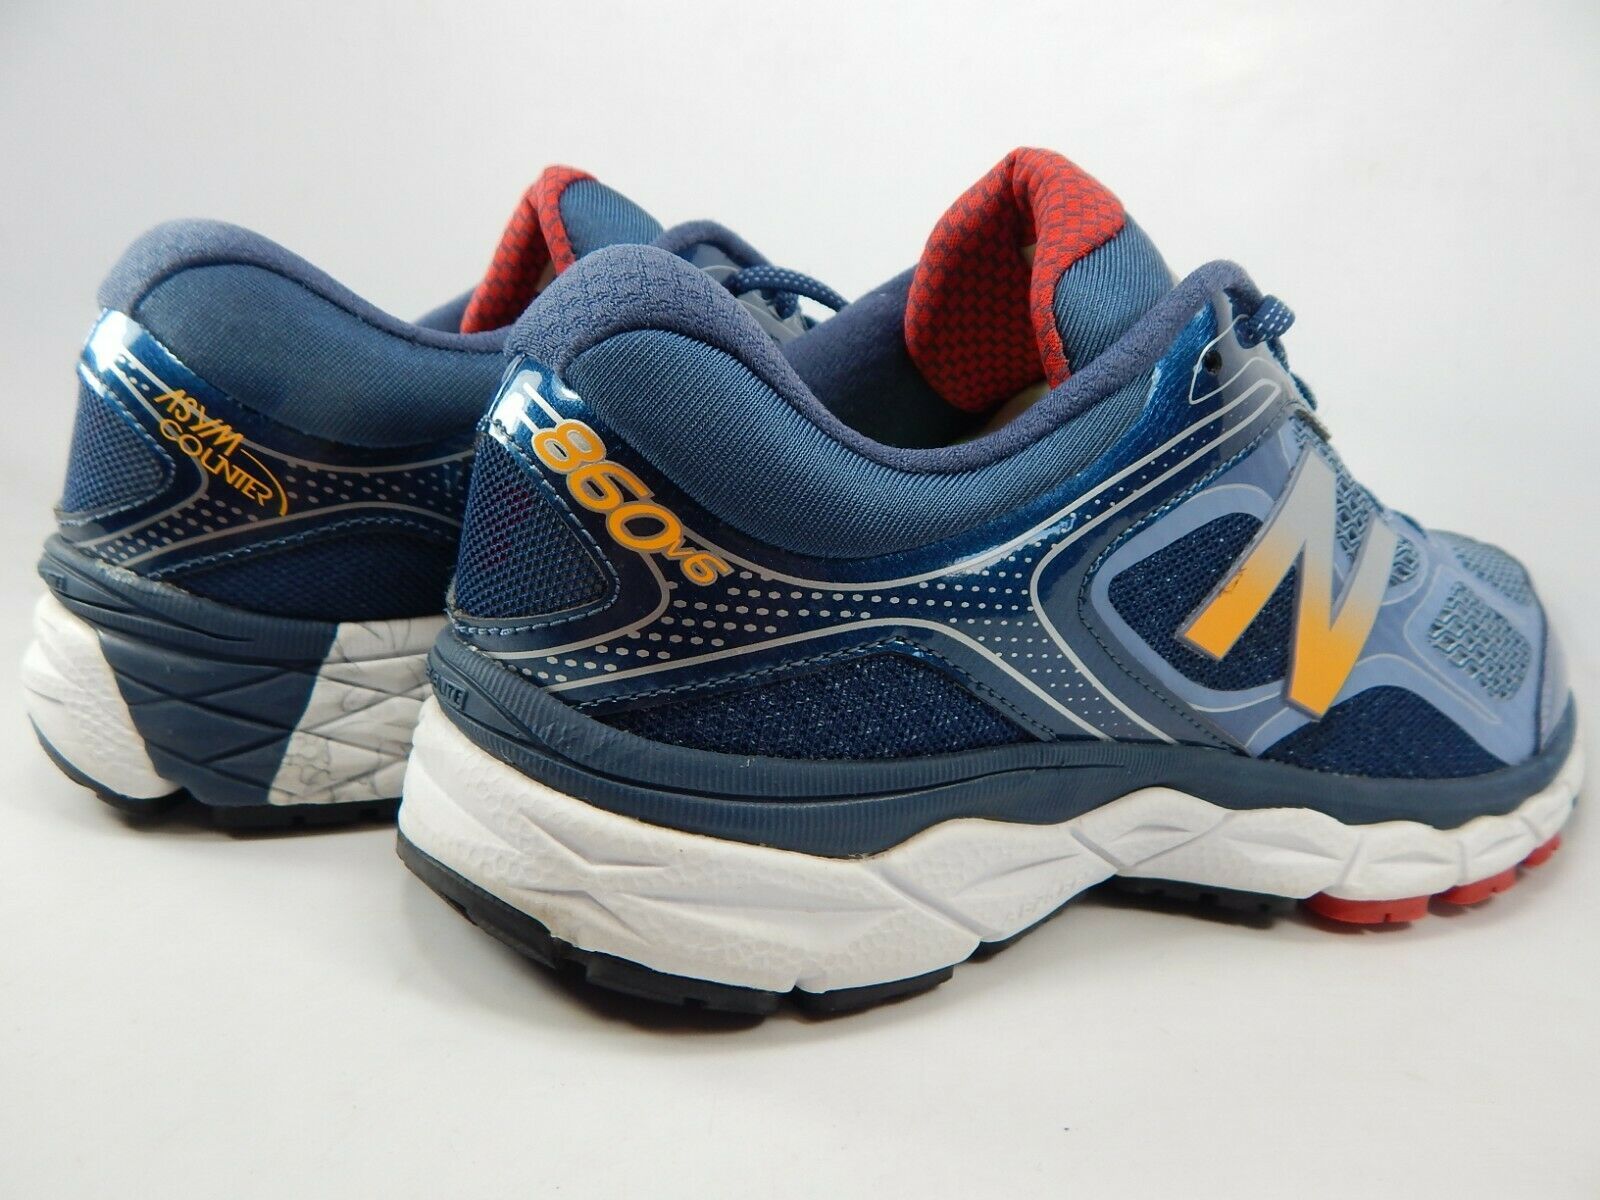 New Balance 860 v6 Size US 11 2E WIDE EU 45 Men's Running Shoes Blue ...